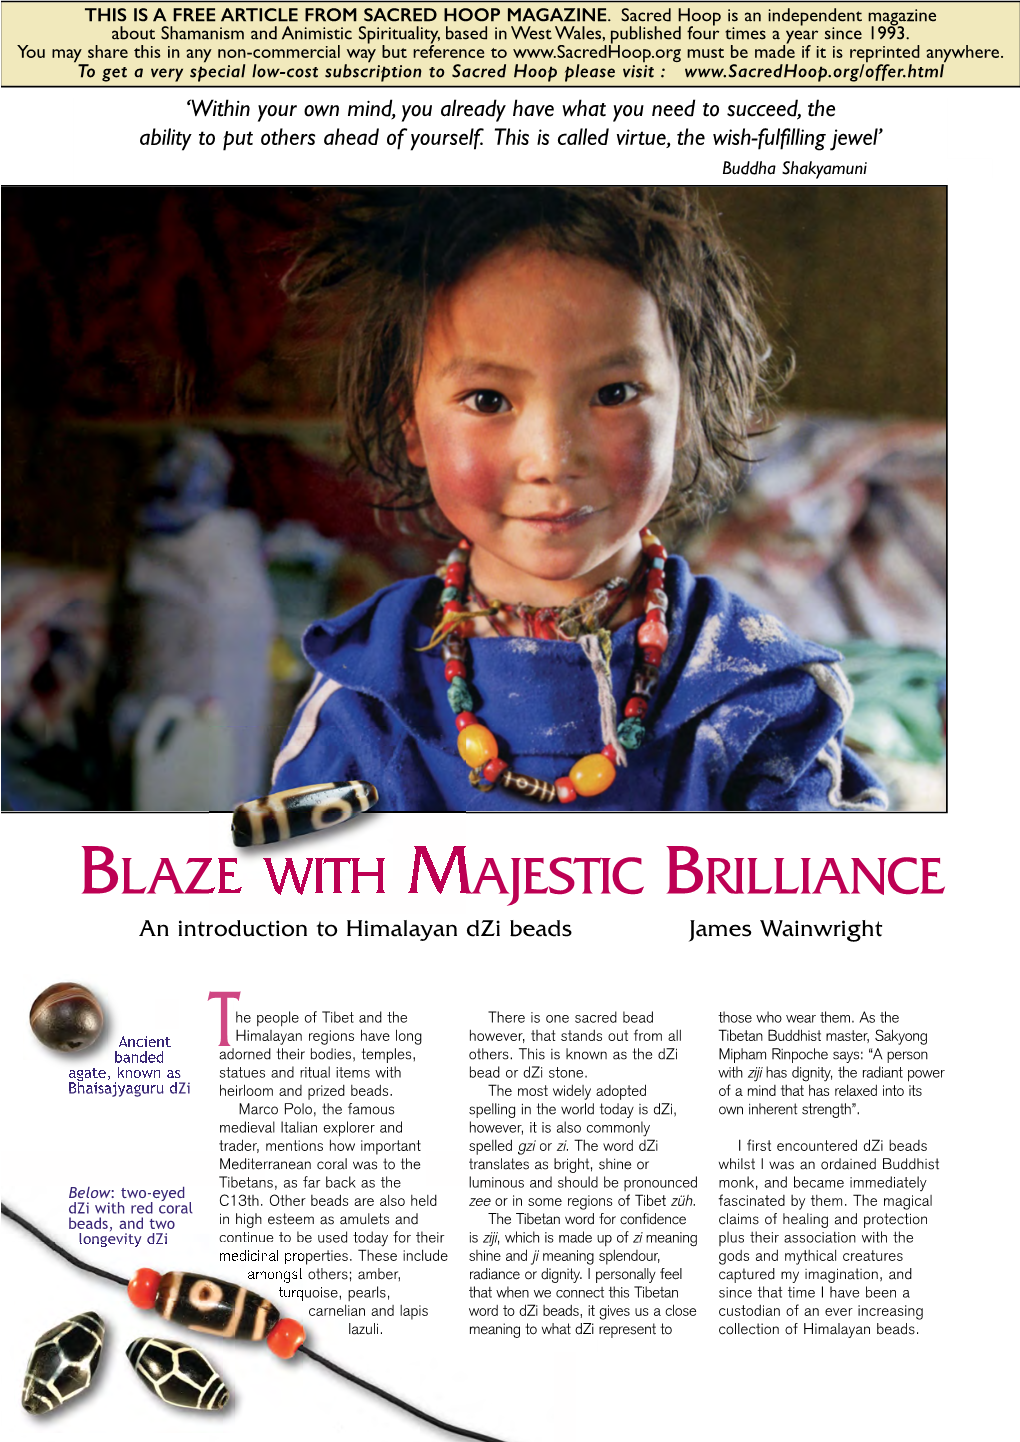 BLAZE with MAJESTIC BRILLIANCE an Introduction to Himalayan Dzi Beads James Wainwright